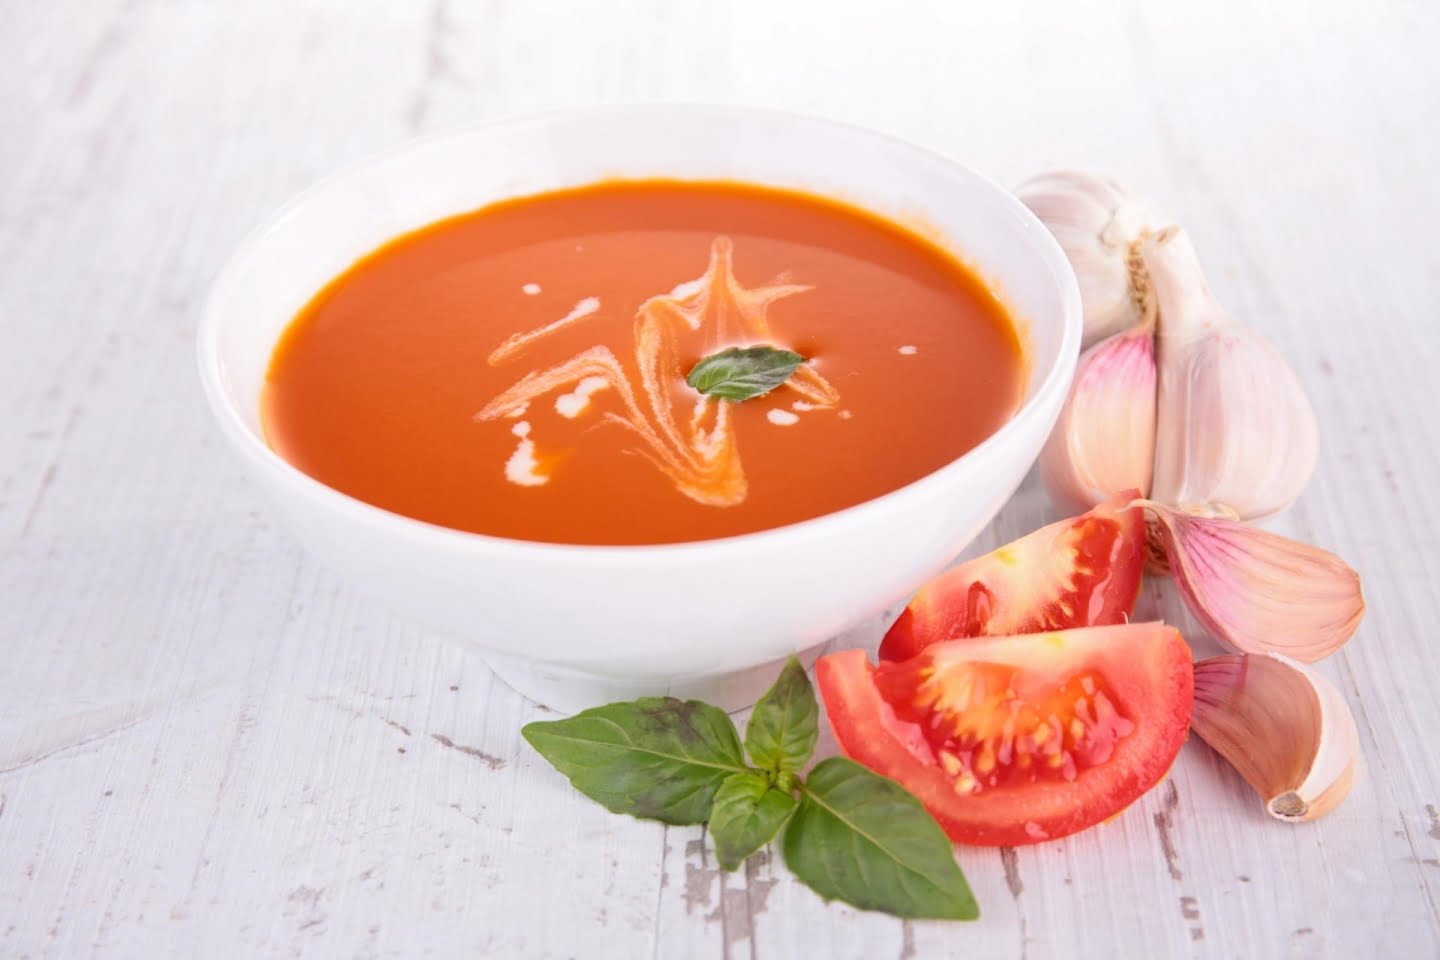 Tomato soup toppings